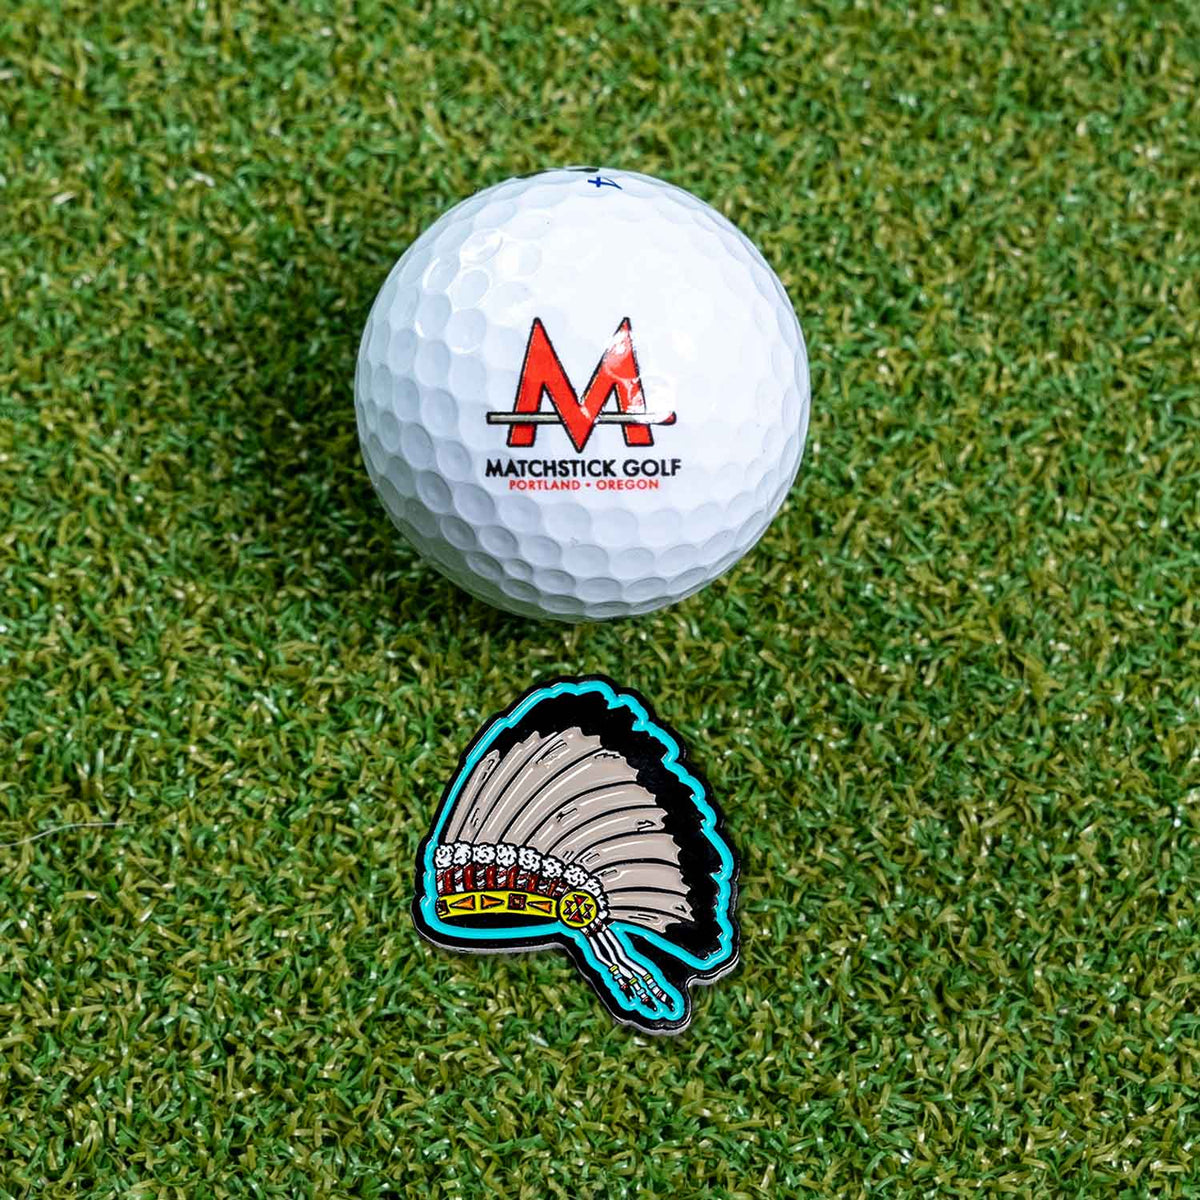 native american indian headdress golf ball marker on grass with ball